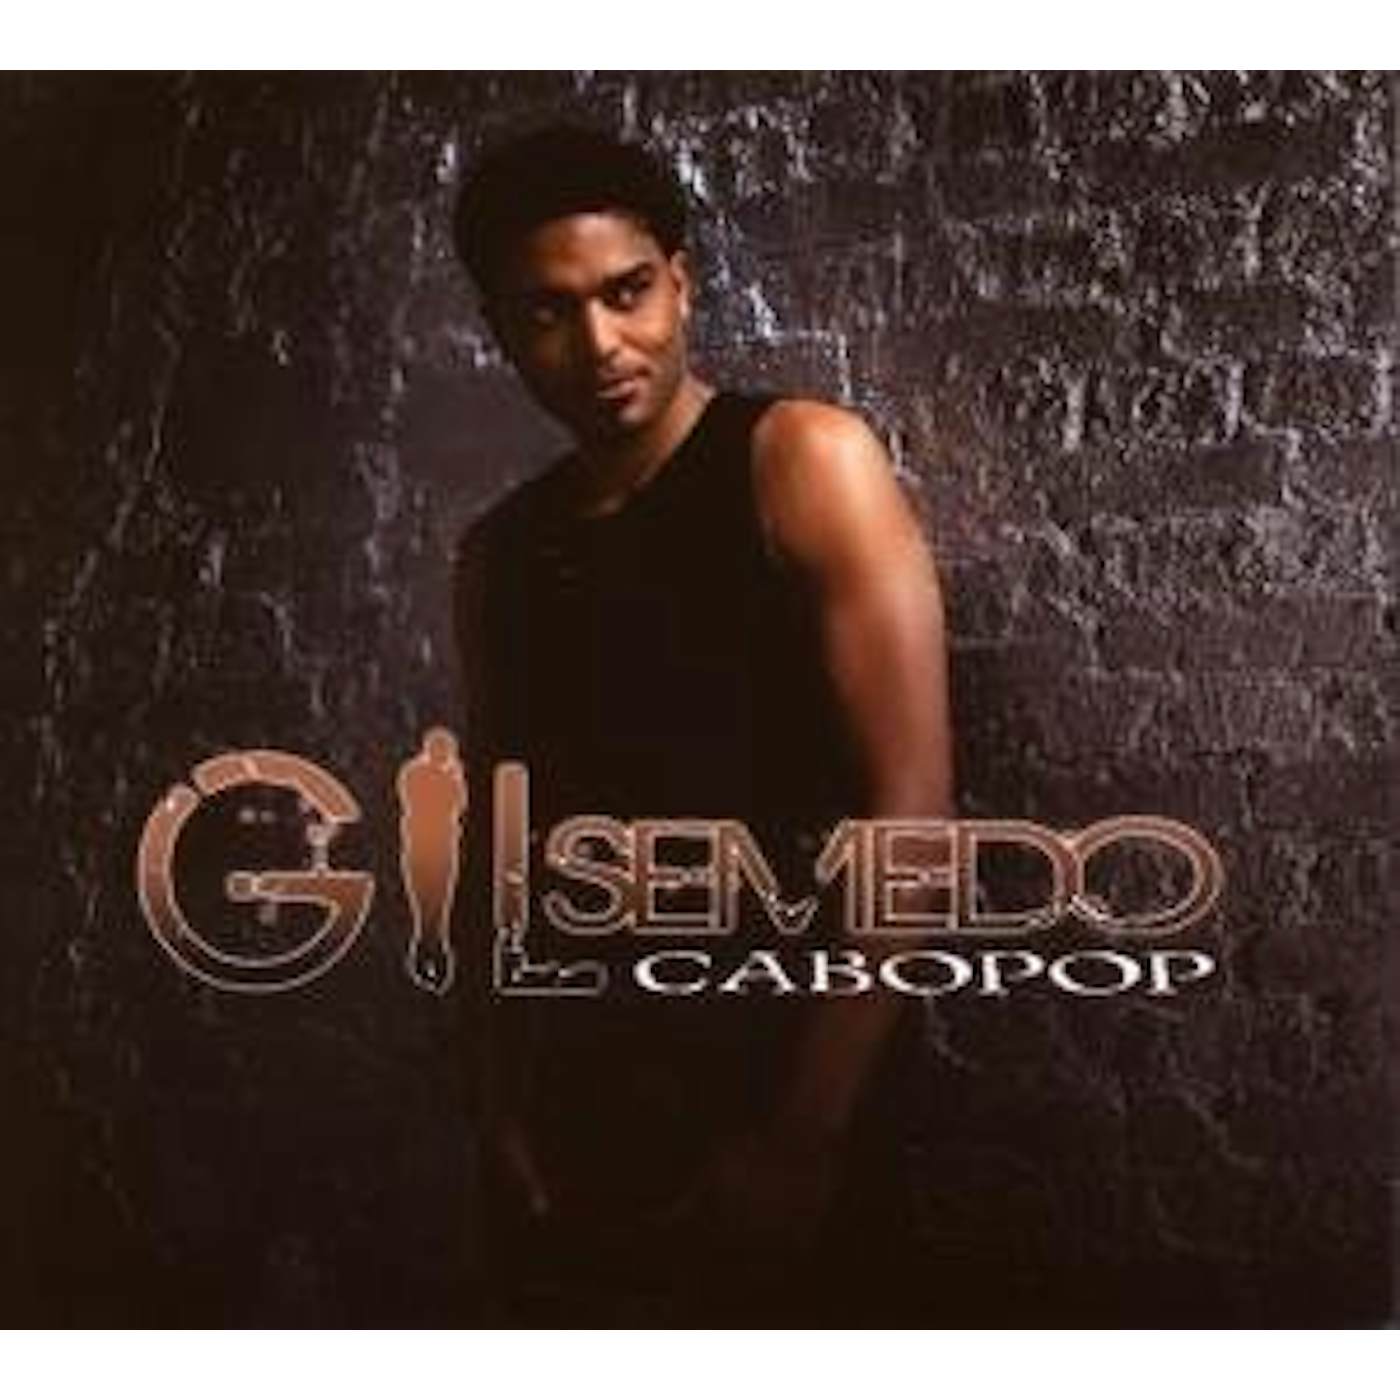 Gil Semedo CABOPOP CD